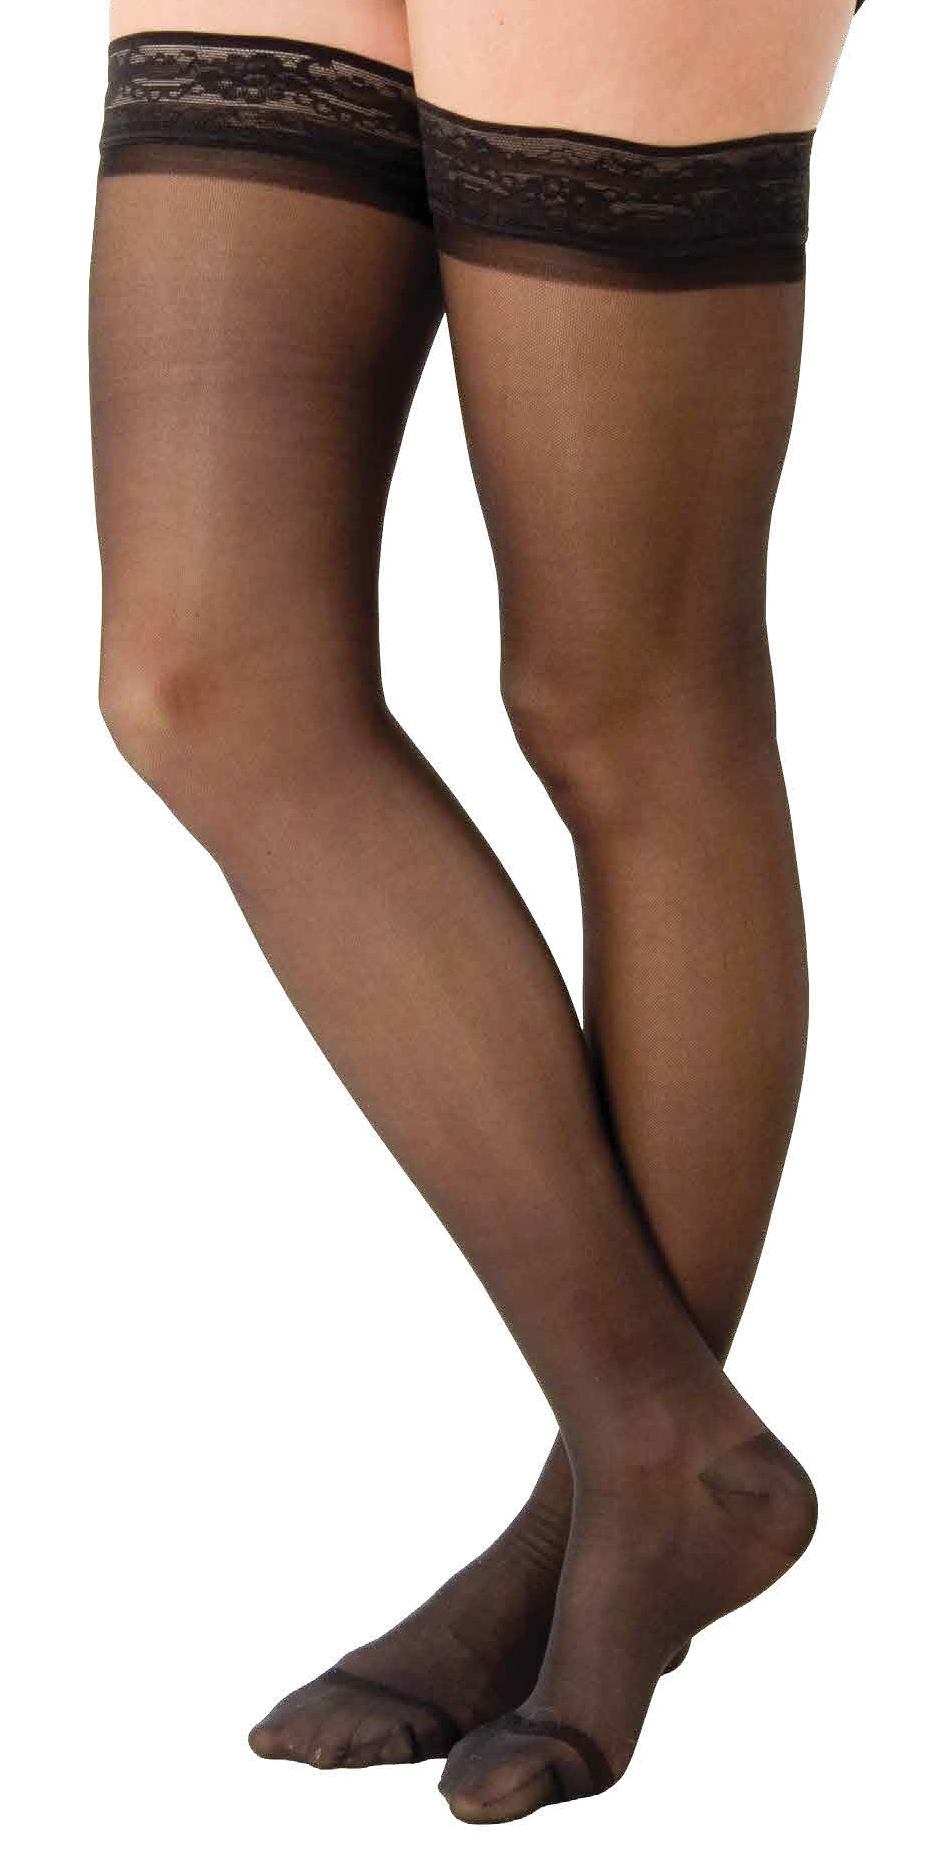 ExoSheer Thigh High Compression Stockings